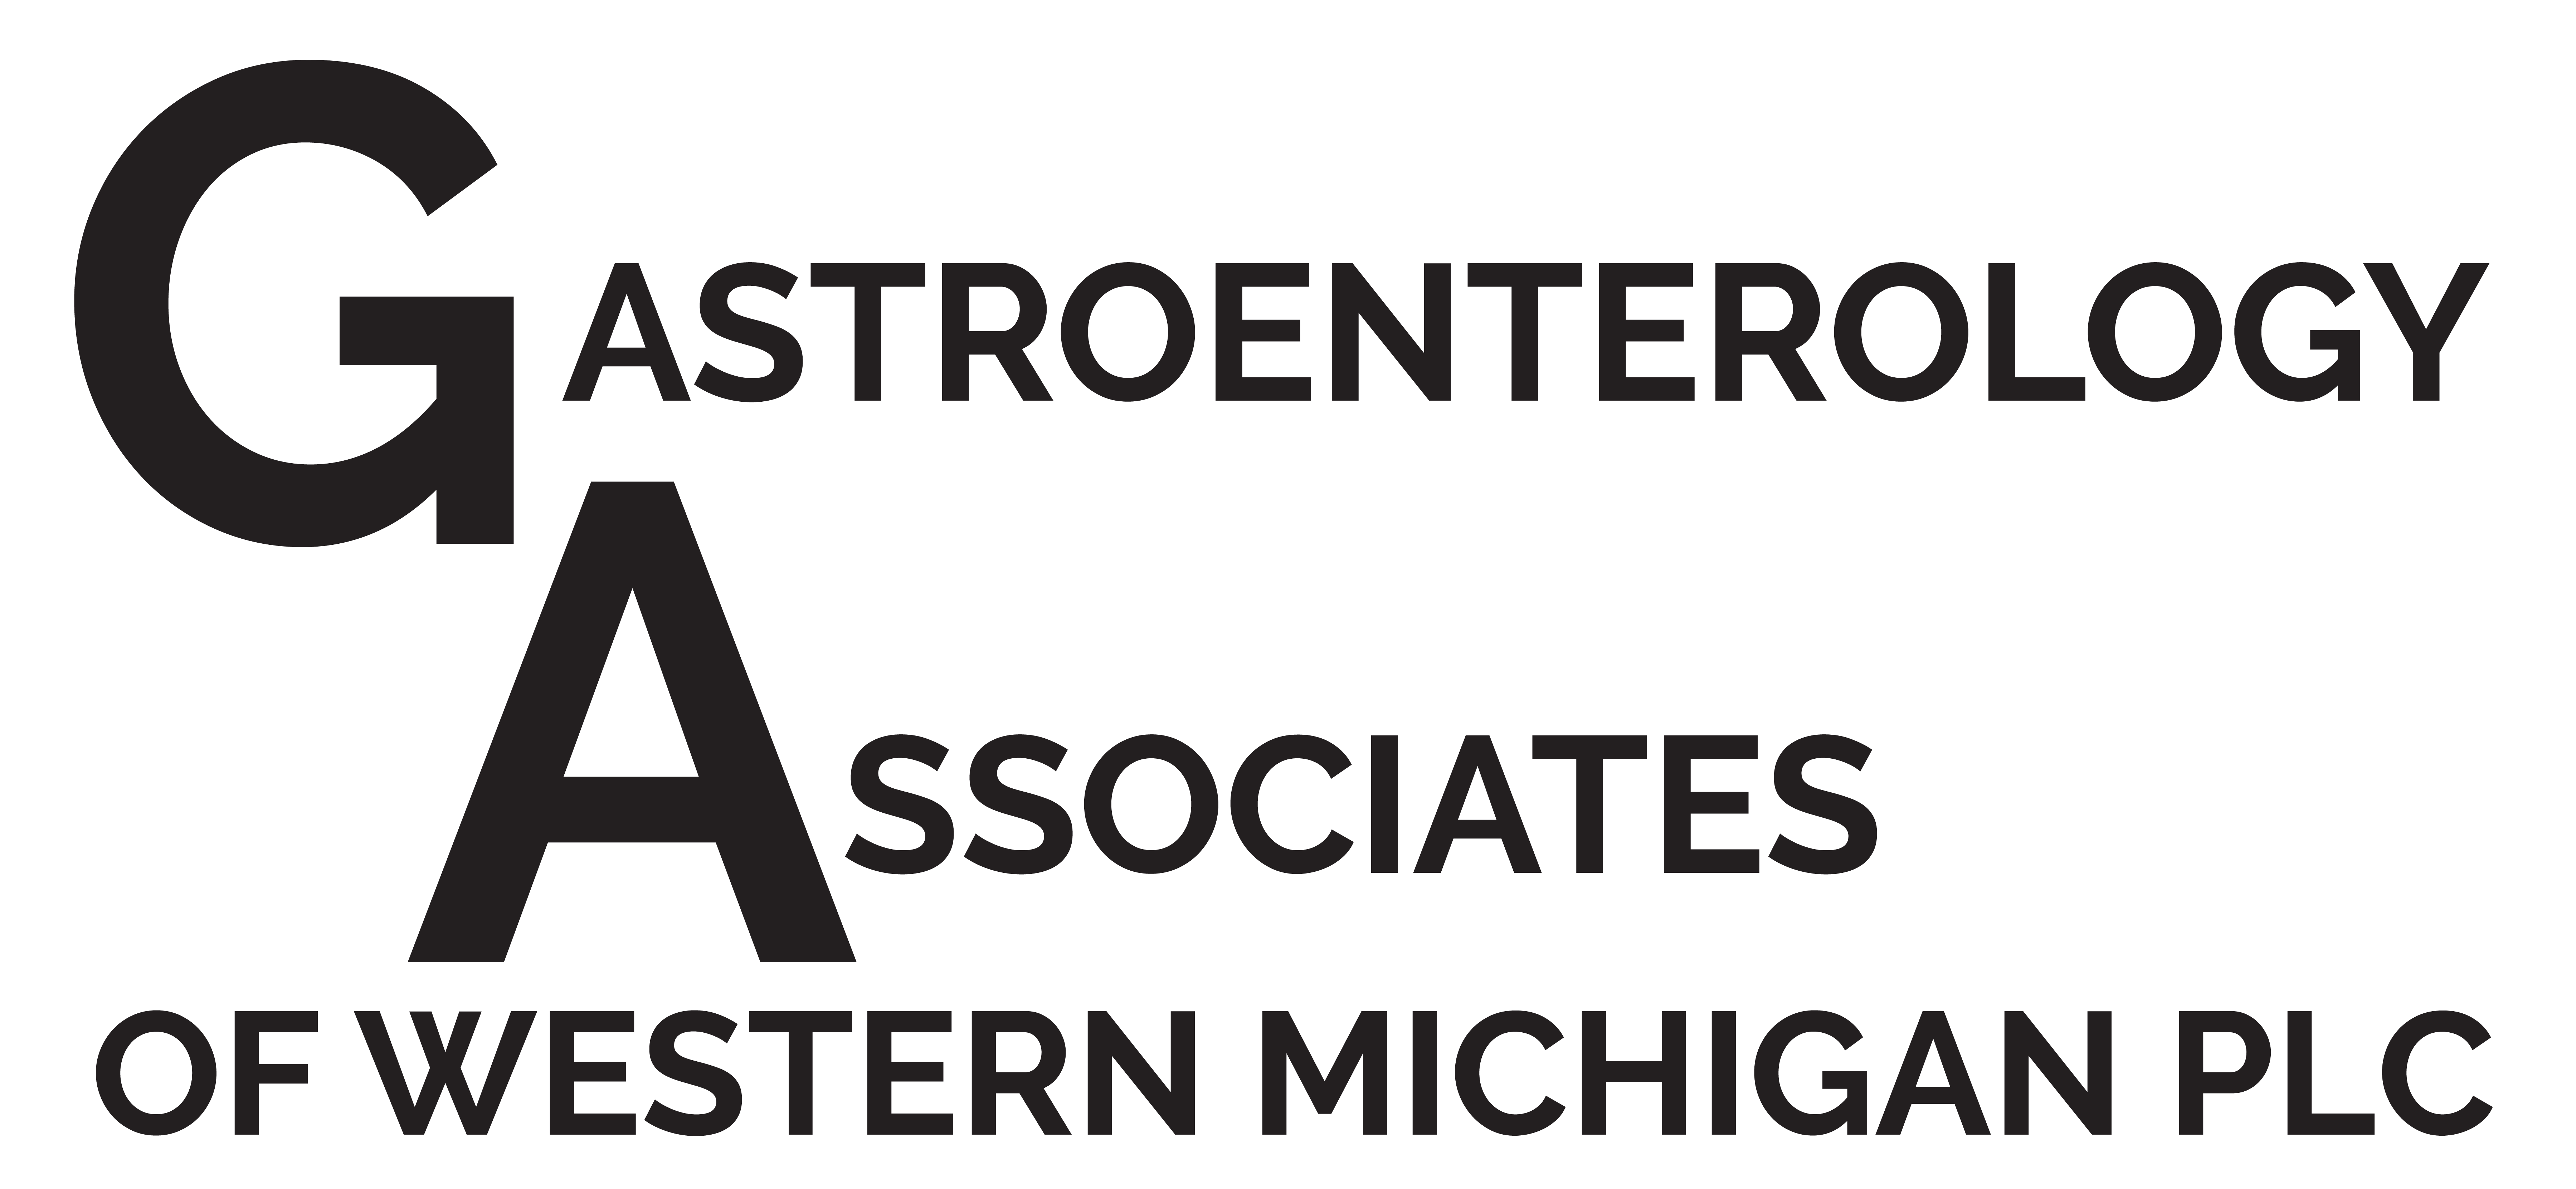 Gastroenterology Associates of Western Michigan, PLC